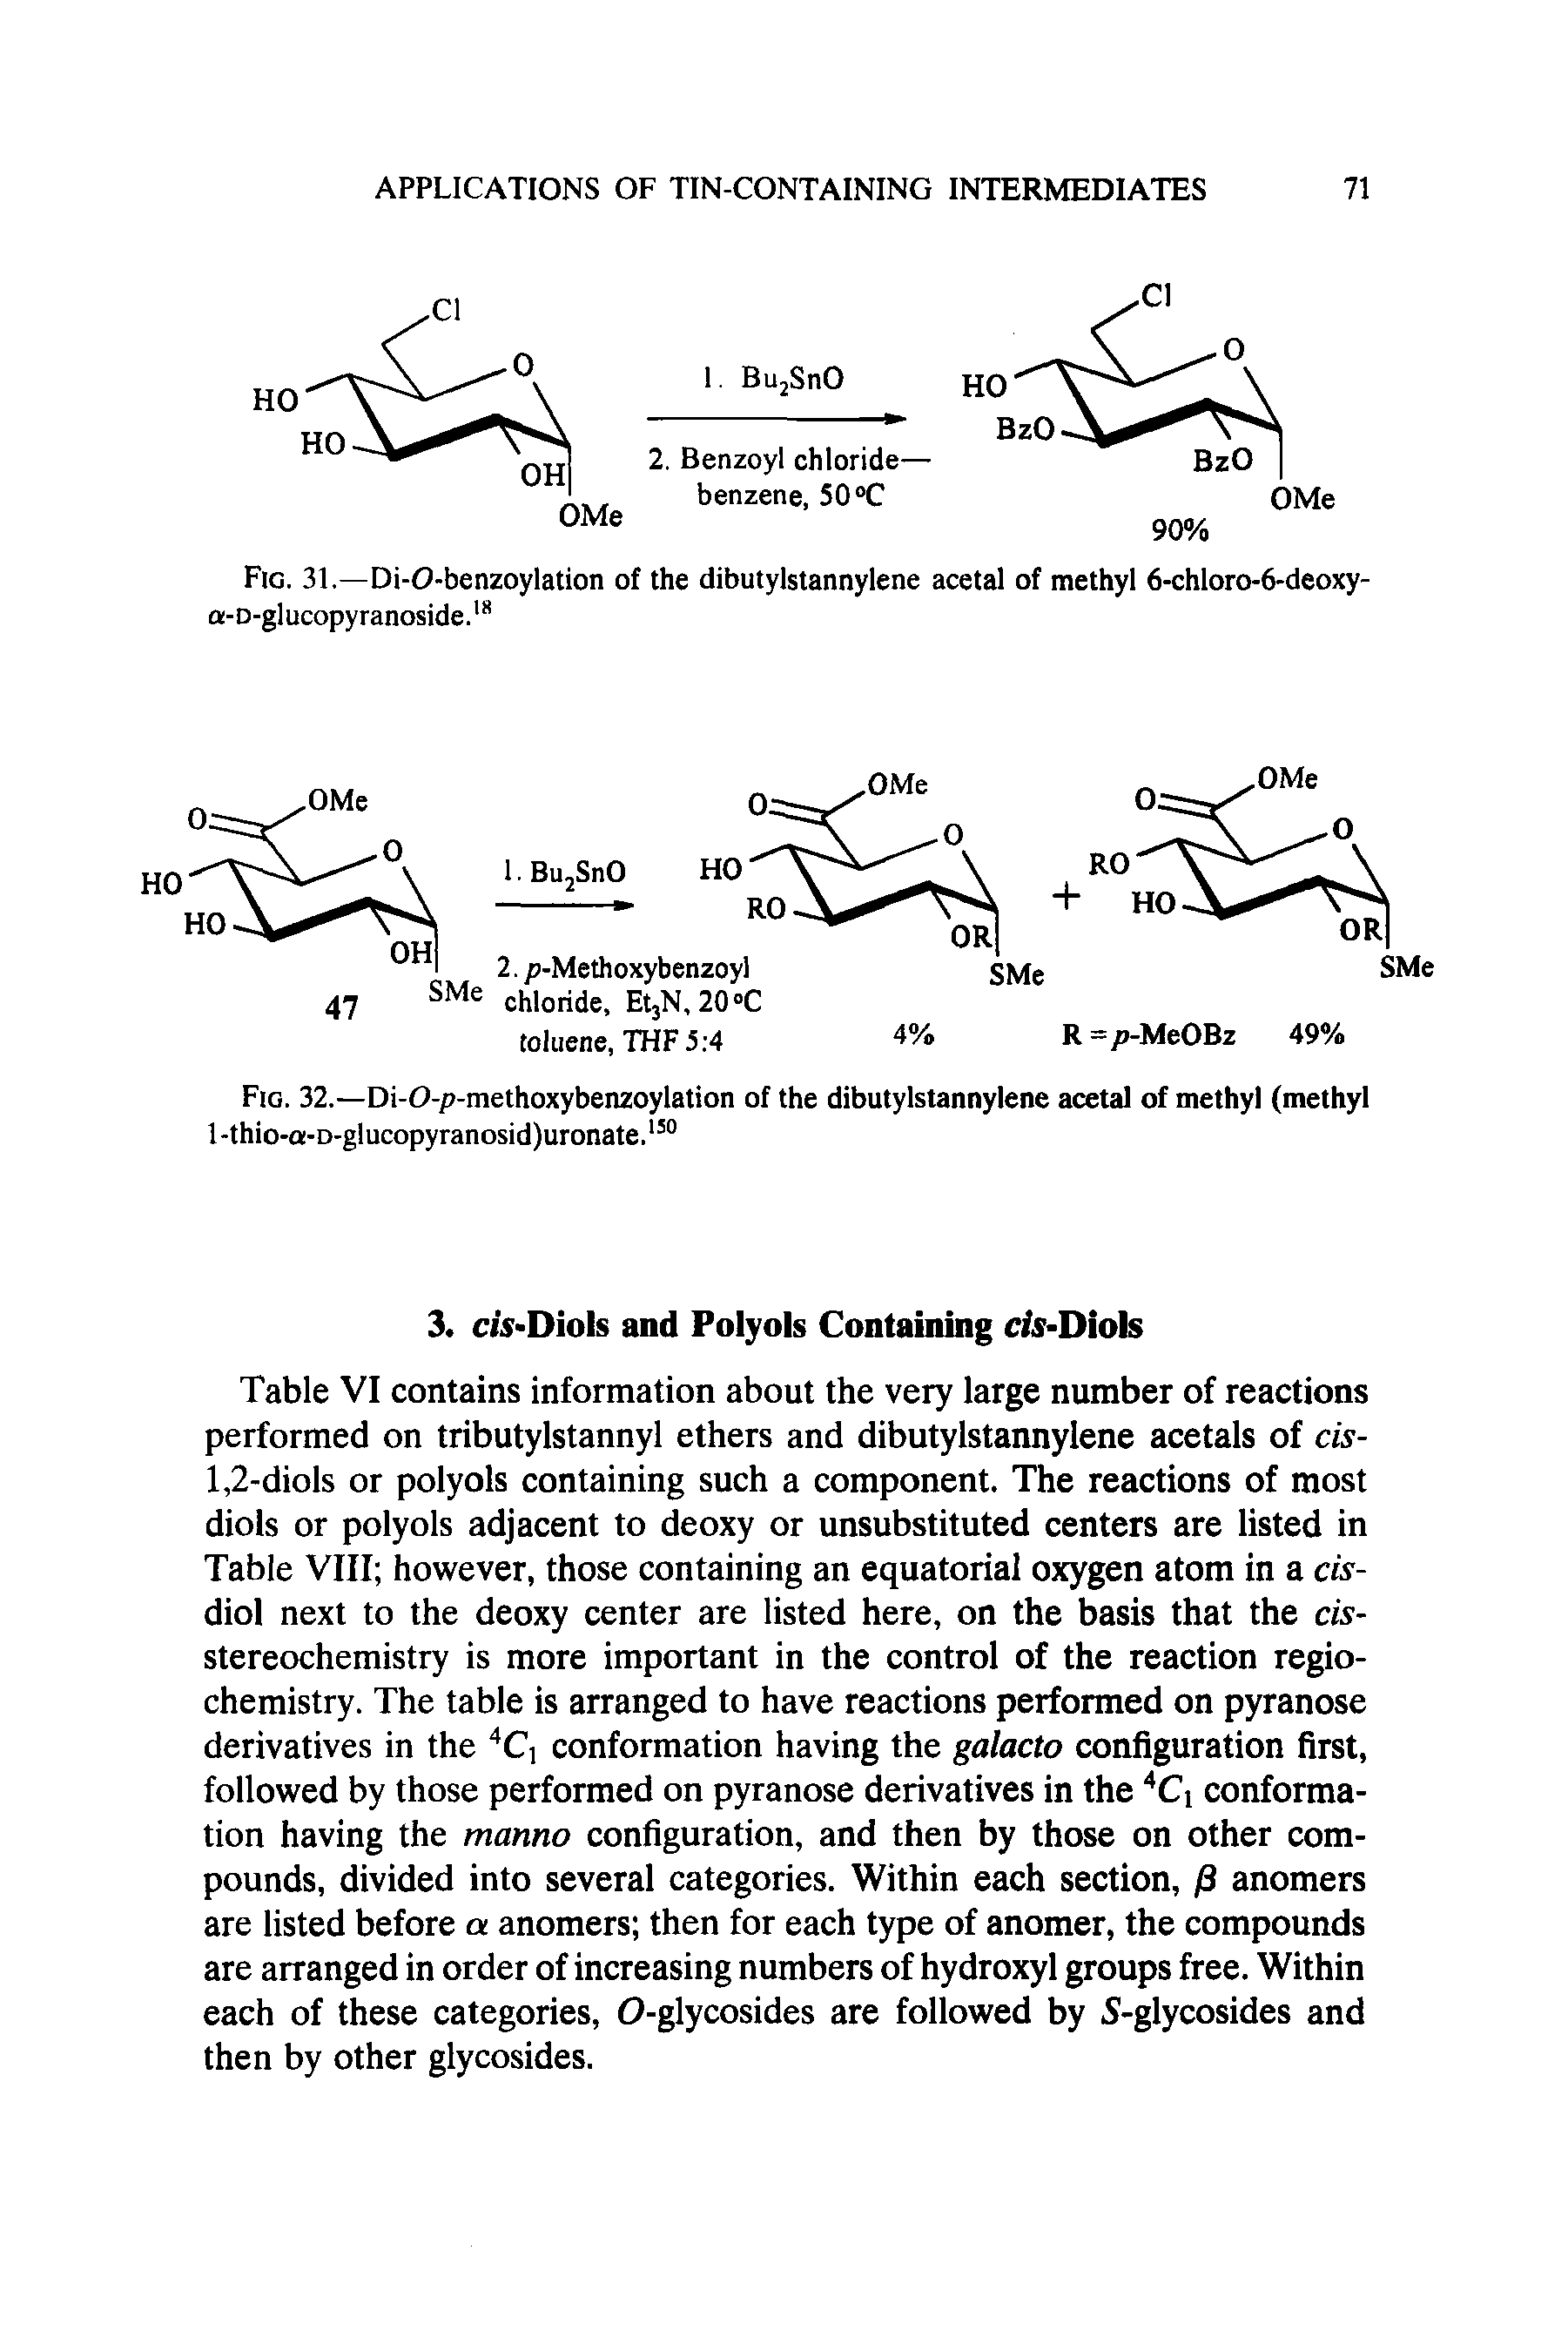 Fig. 32.—Di-O-p-methoxybenzoylation of the dibutylstannylene acetal of methyl (methyl l-thio-a -D-glucopyranosid)uronate.1 0...